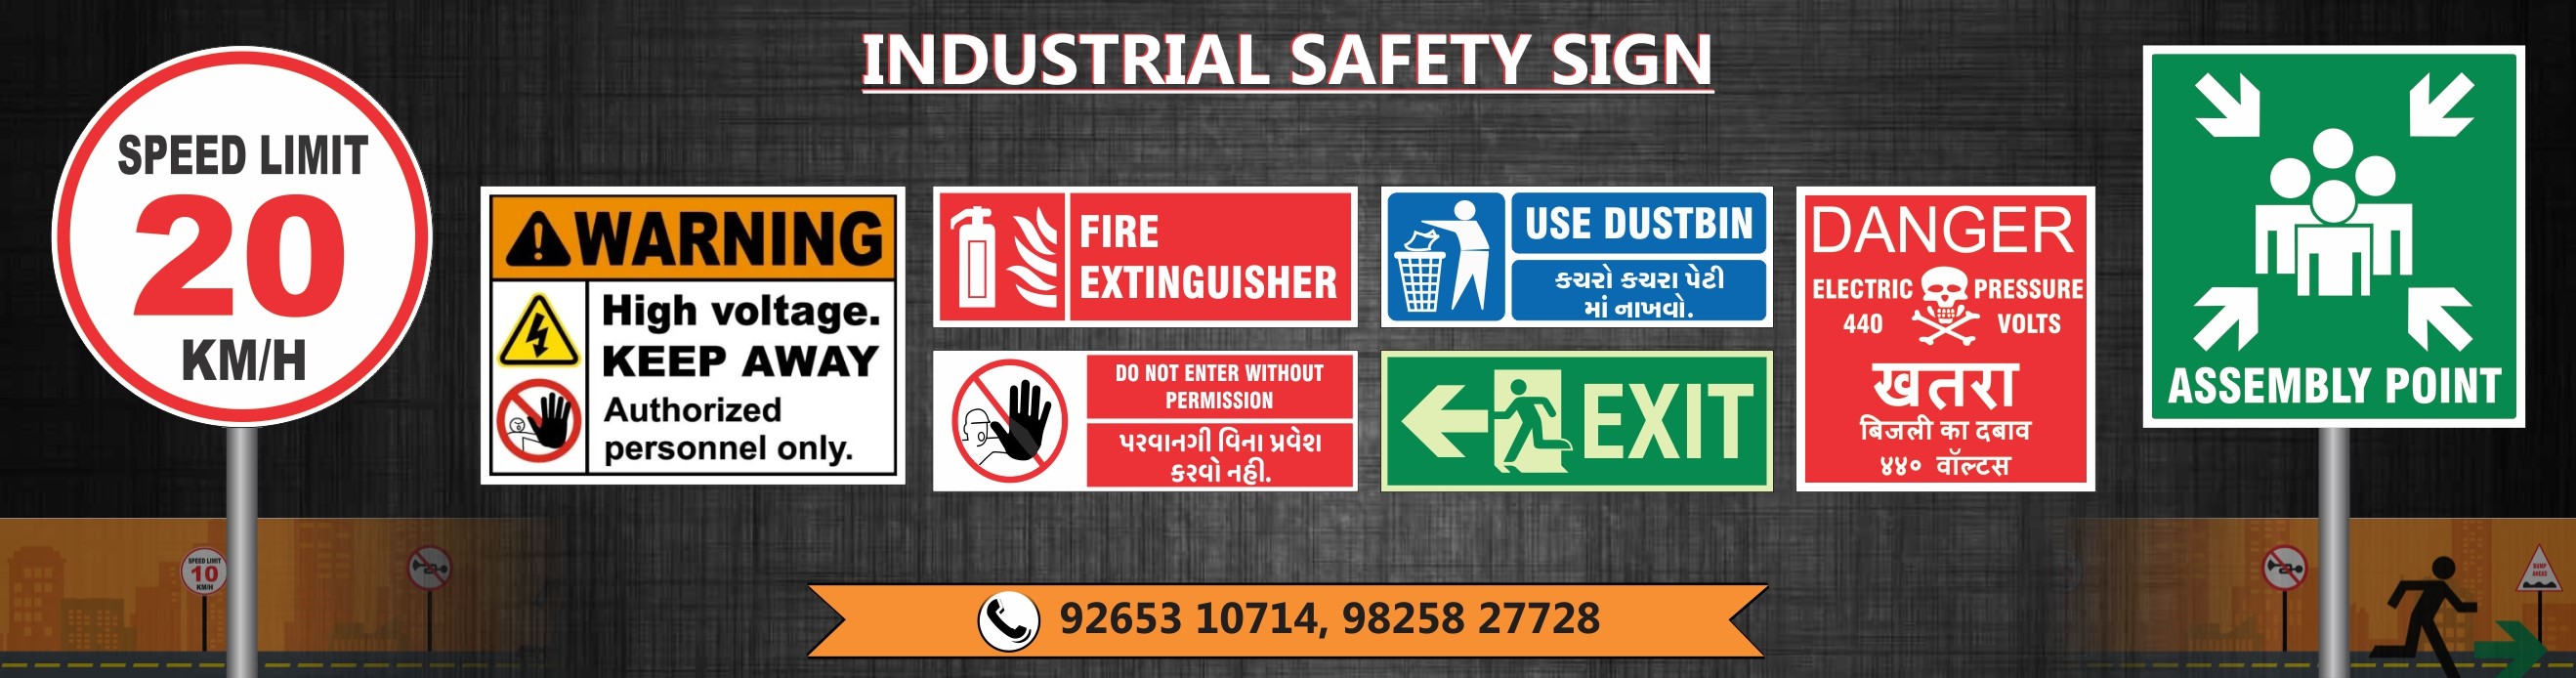 Industrial Signage 